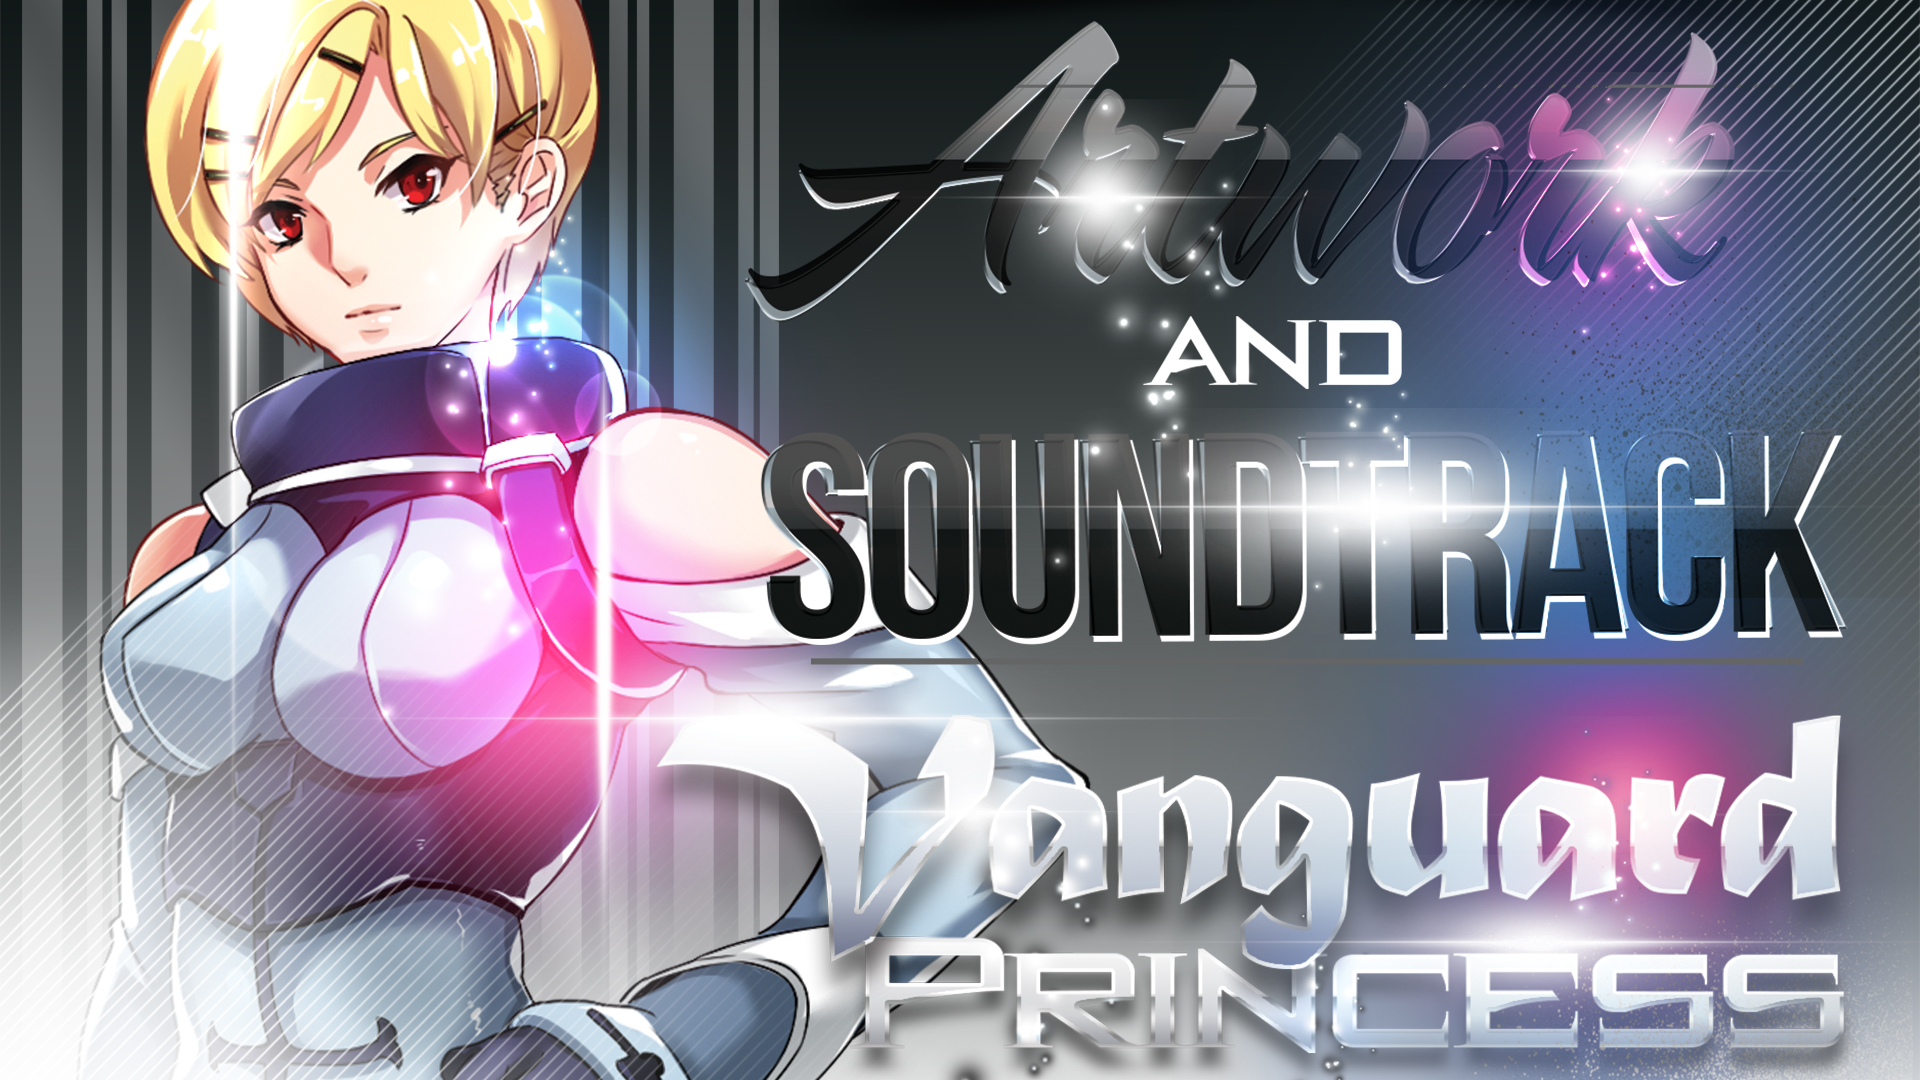 Vanguard Princess - Artwork and Soundtrack DLC Steam CD Key 1.41 USD